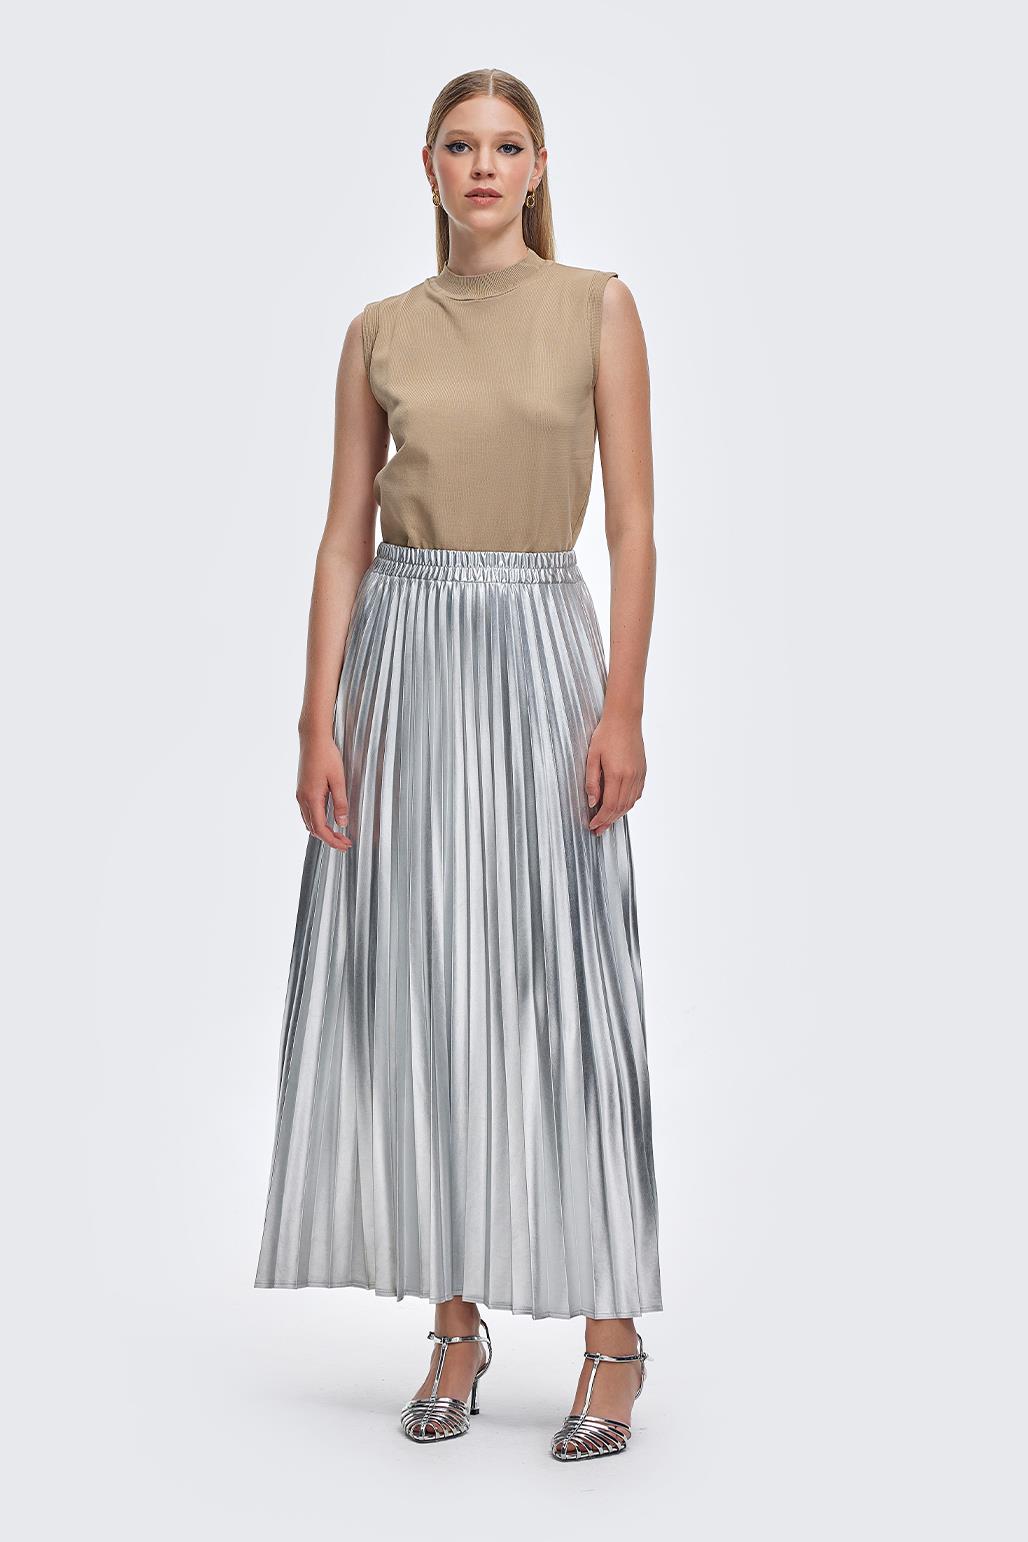 Galaxy Pleated Skirt Silver